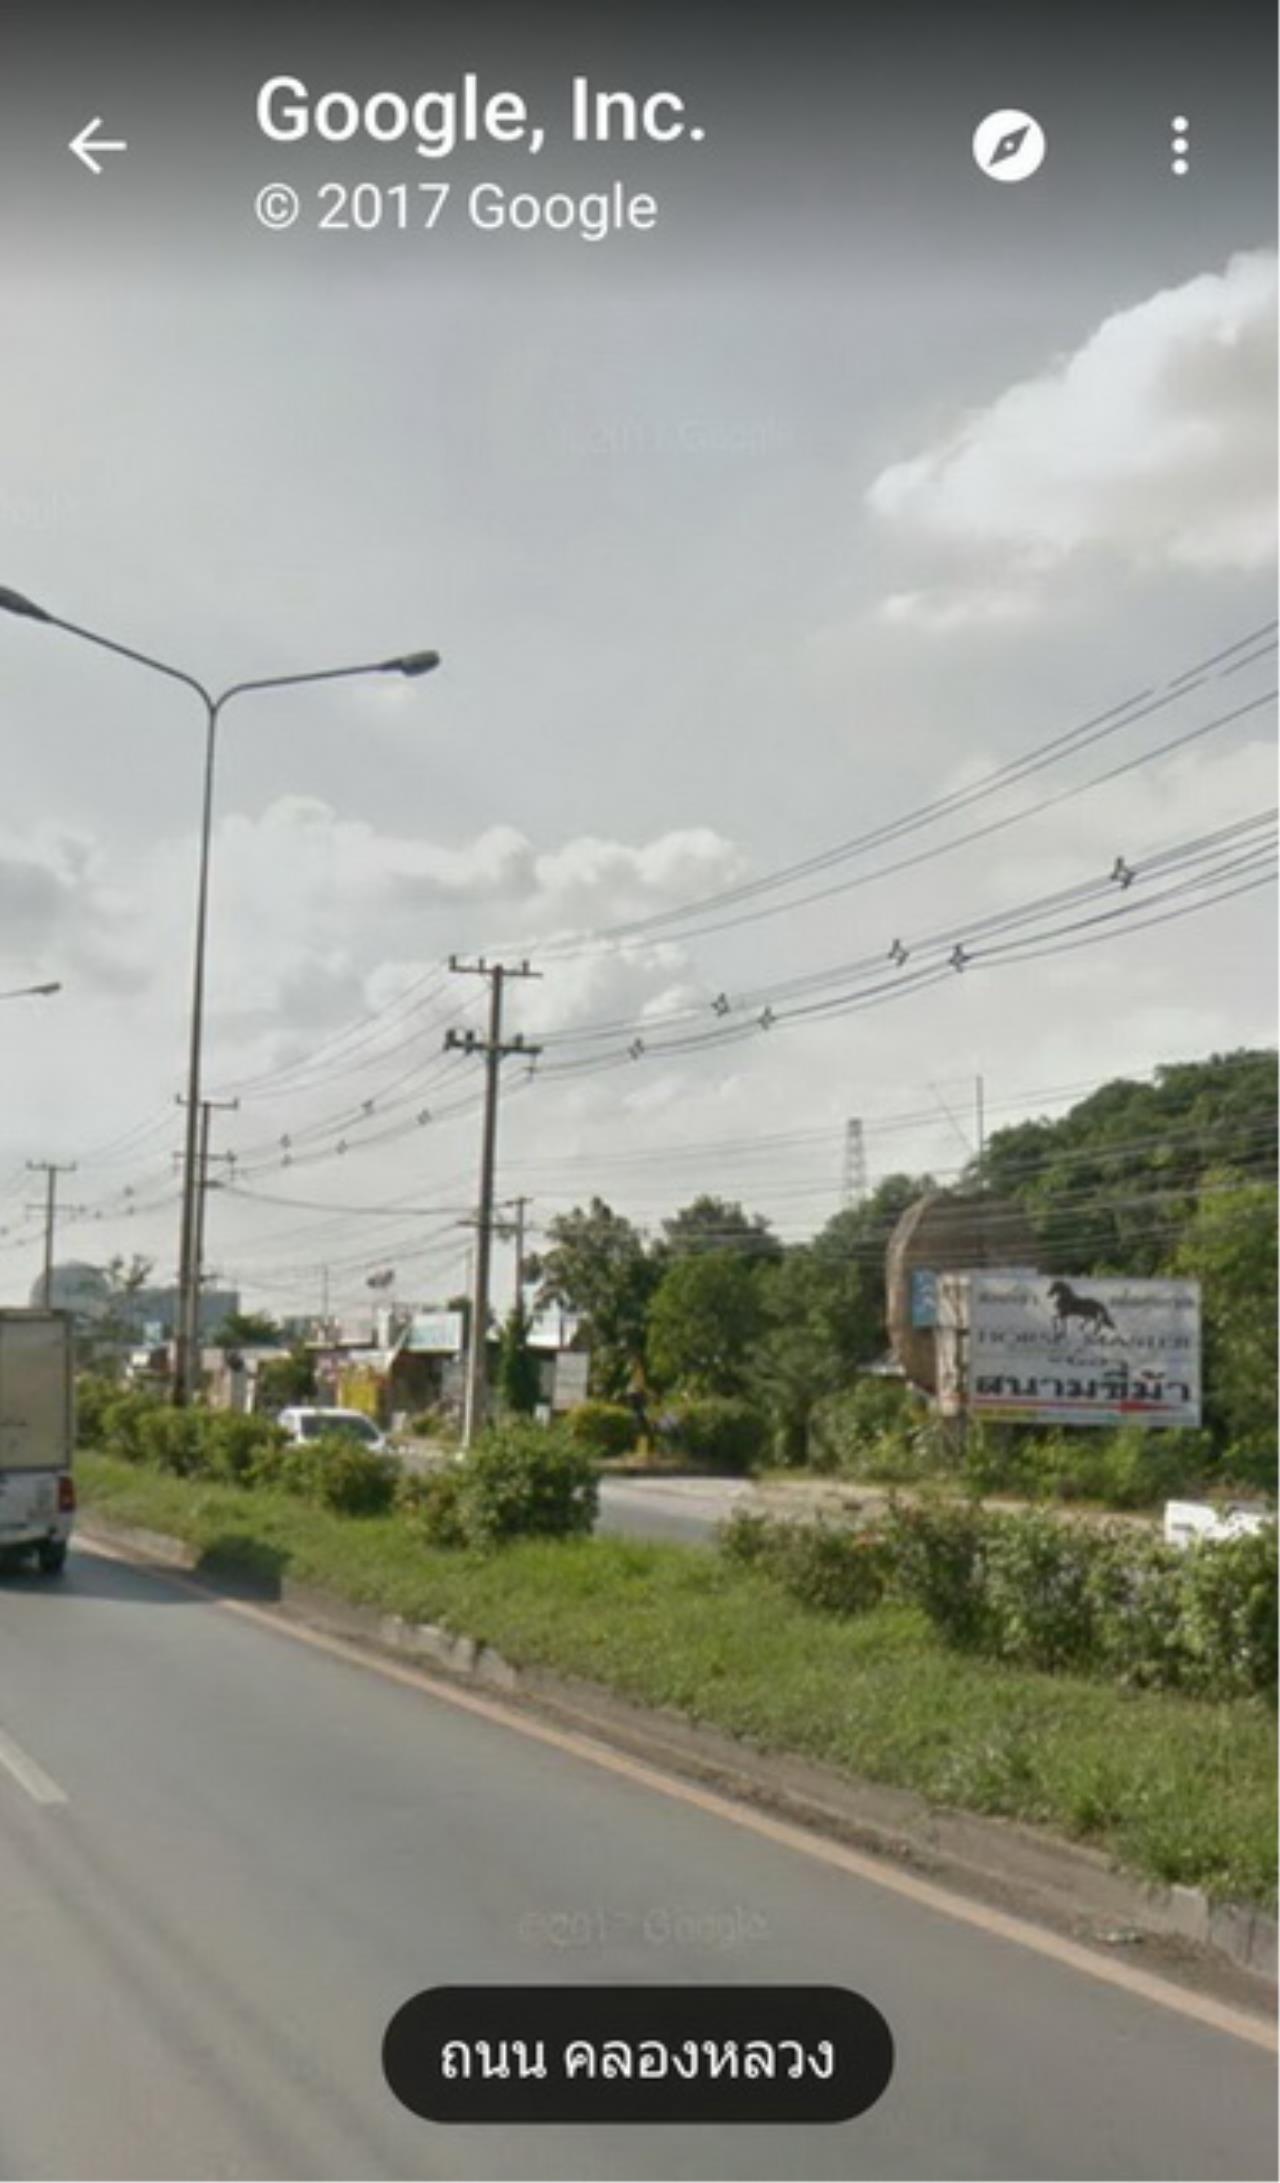 37736 - Khlong Luang-Klong 4 Road Land for sale Plot size 336 acres, ภาพที่ 4